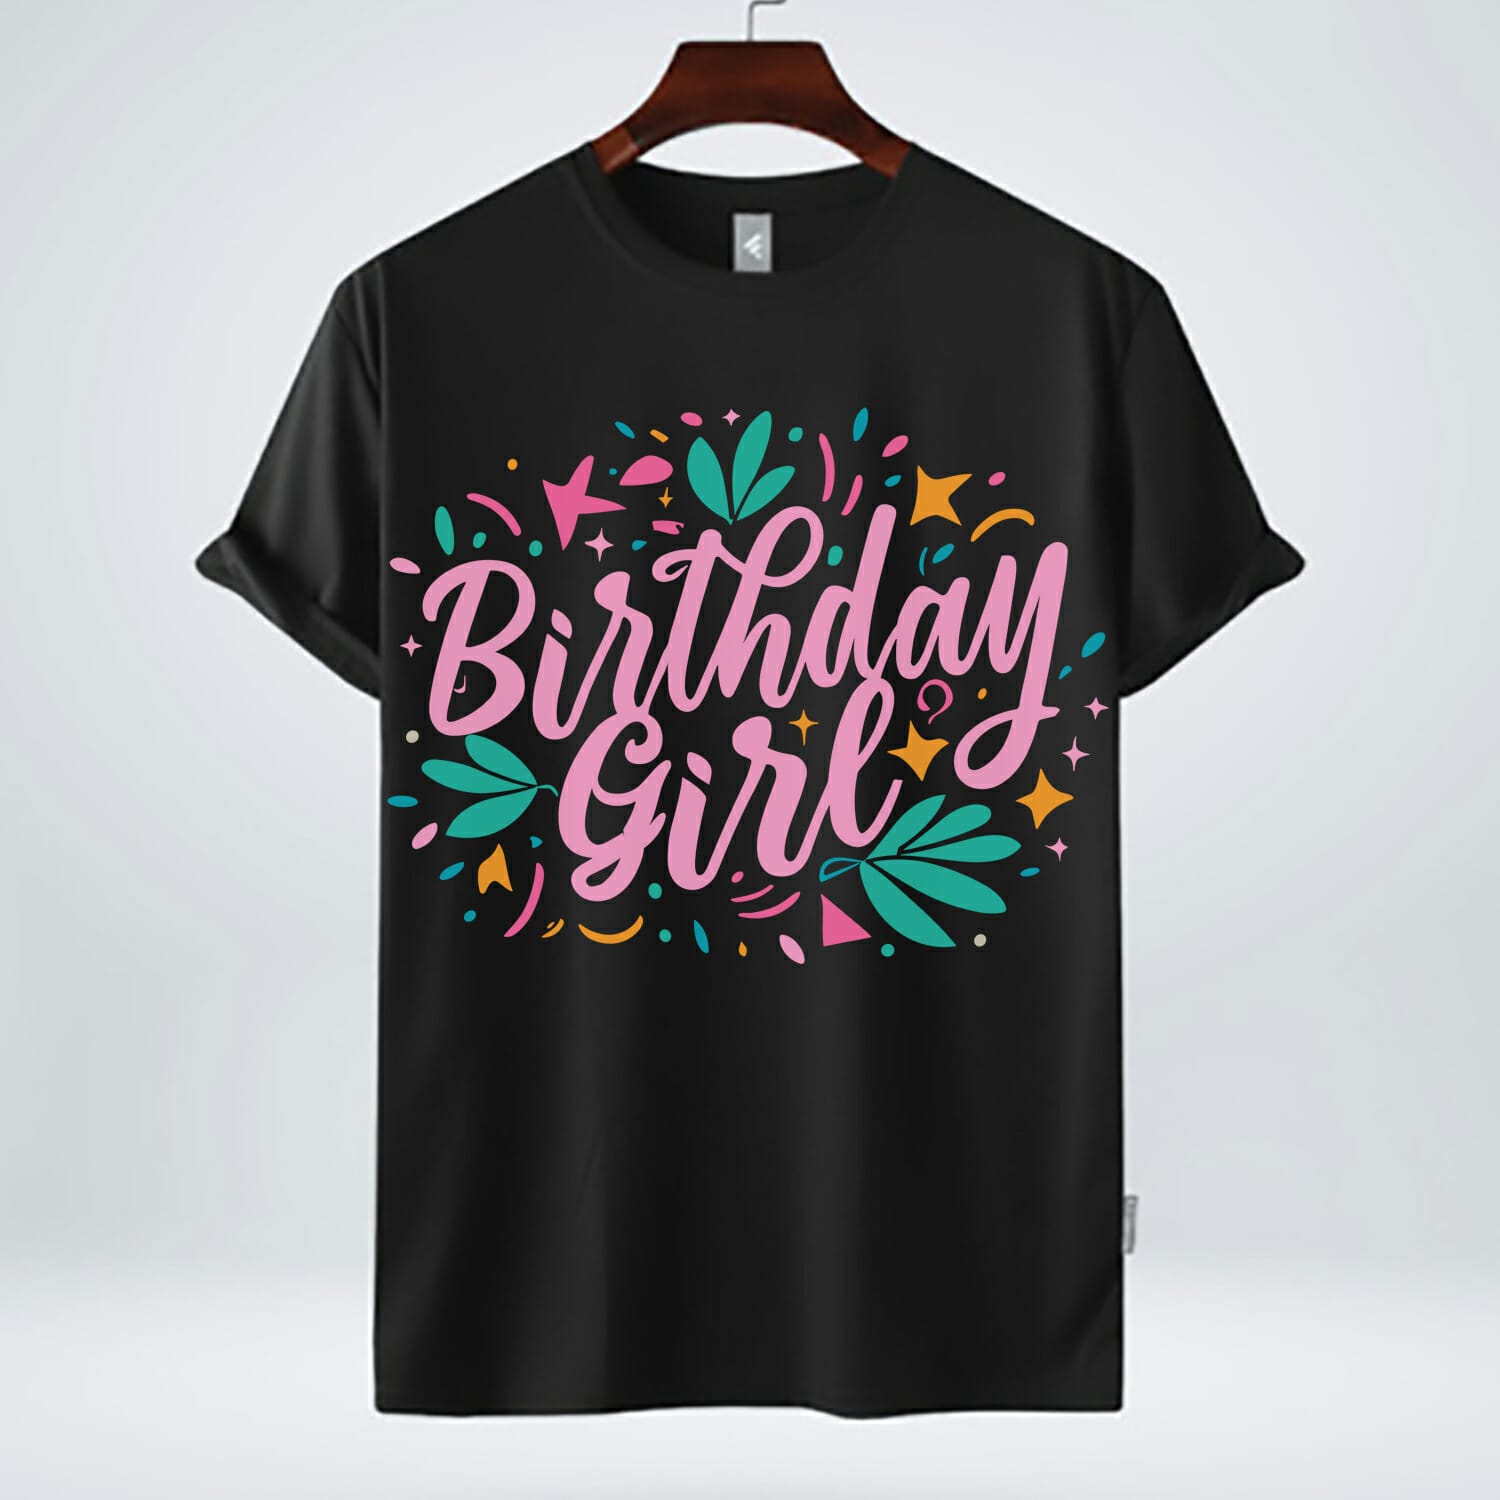 Free T shirt Design Birthday Girl T-Shirt Design